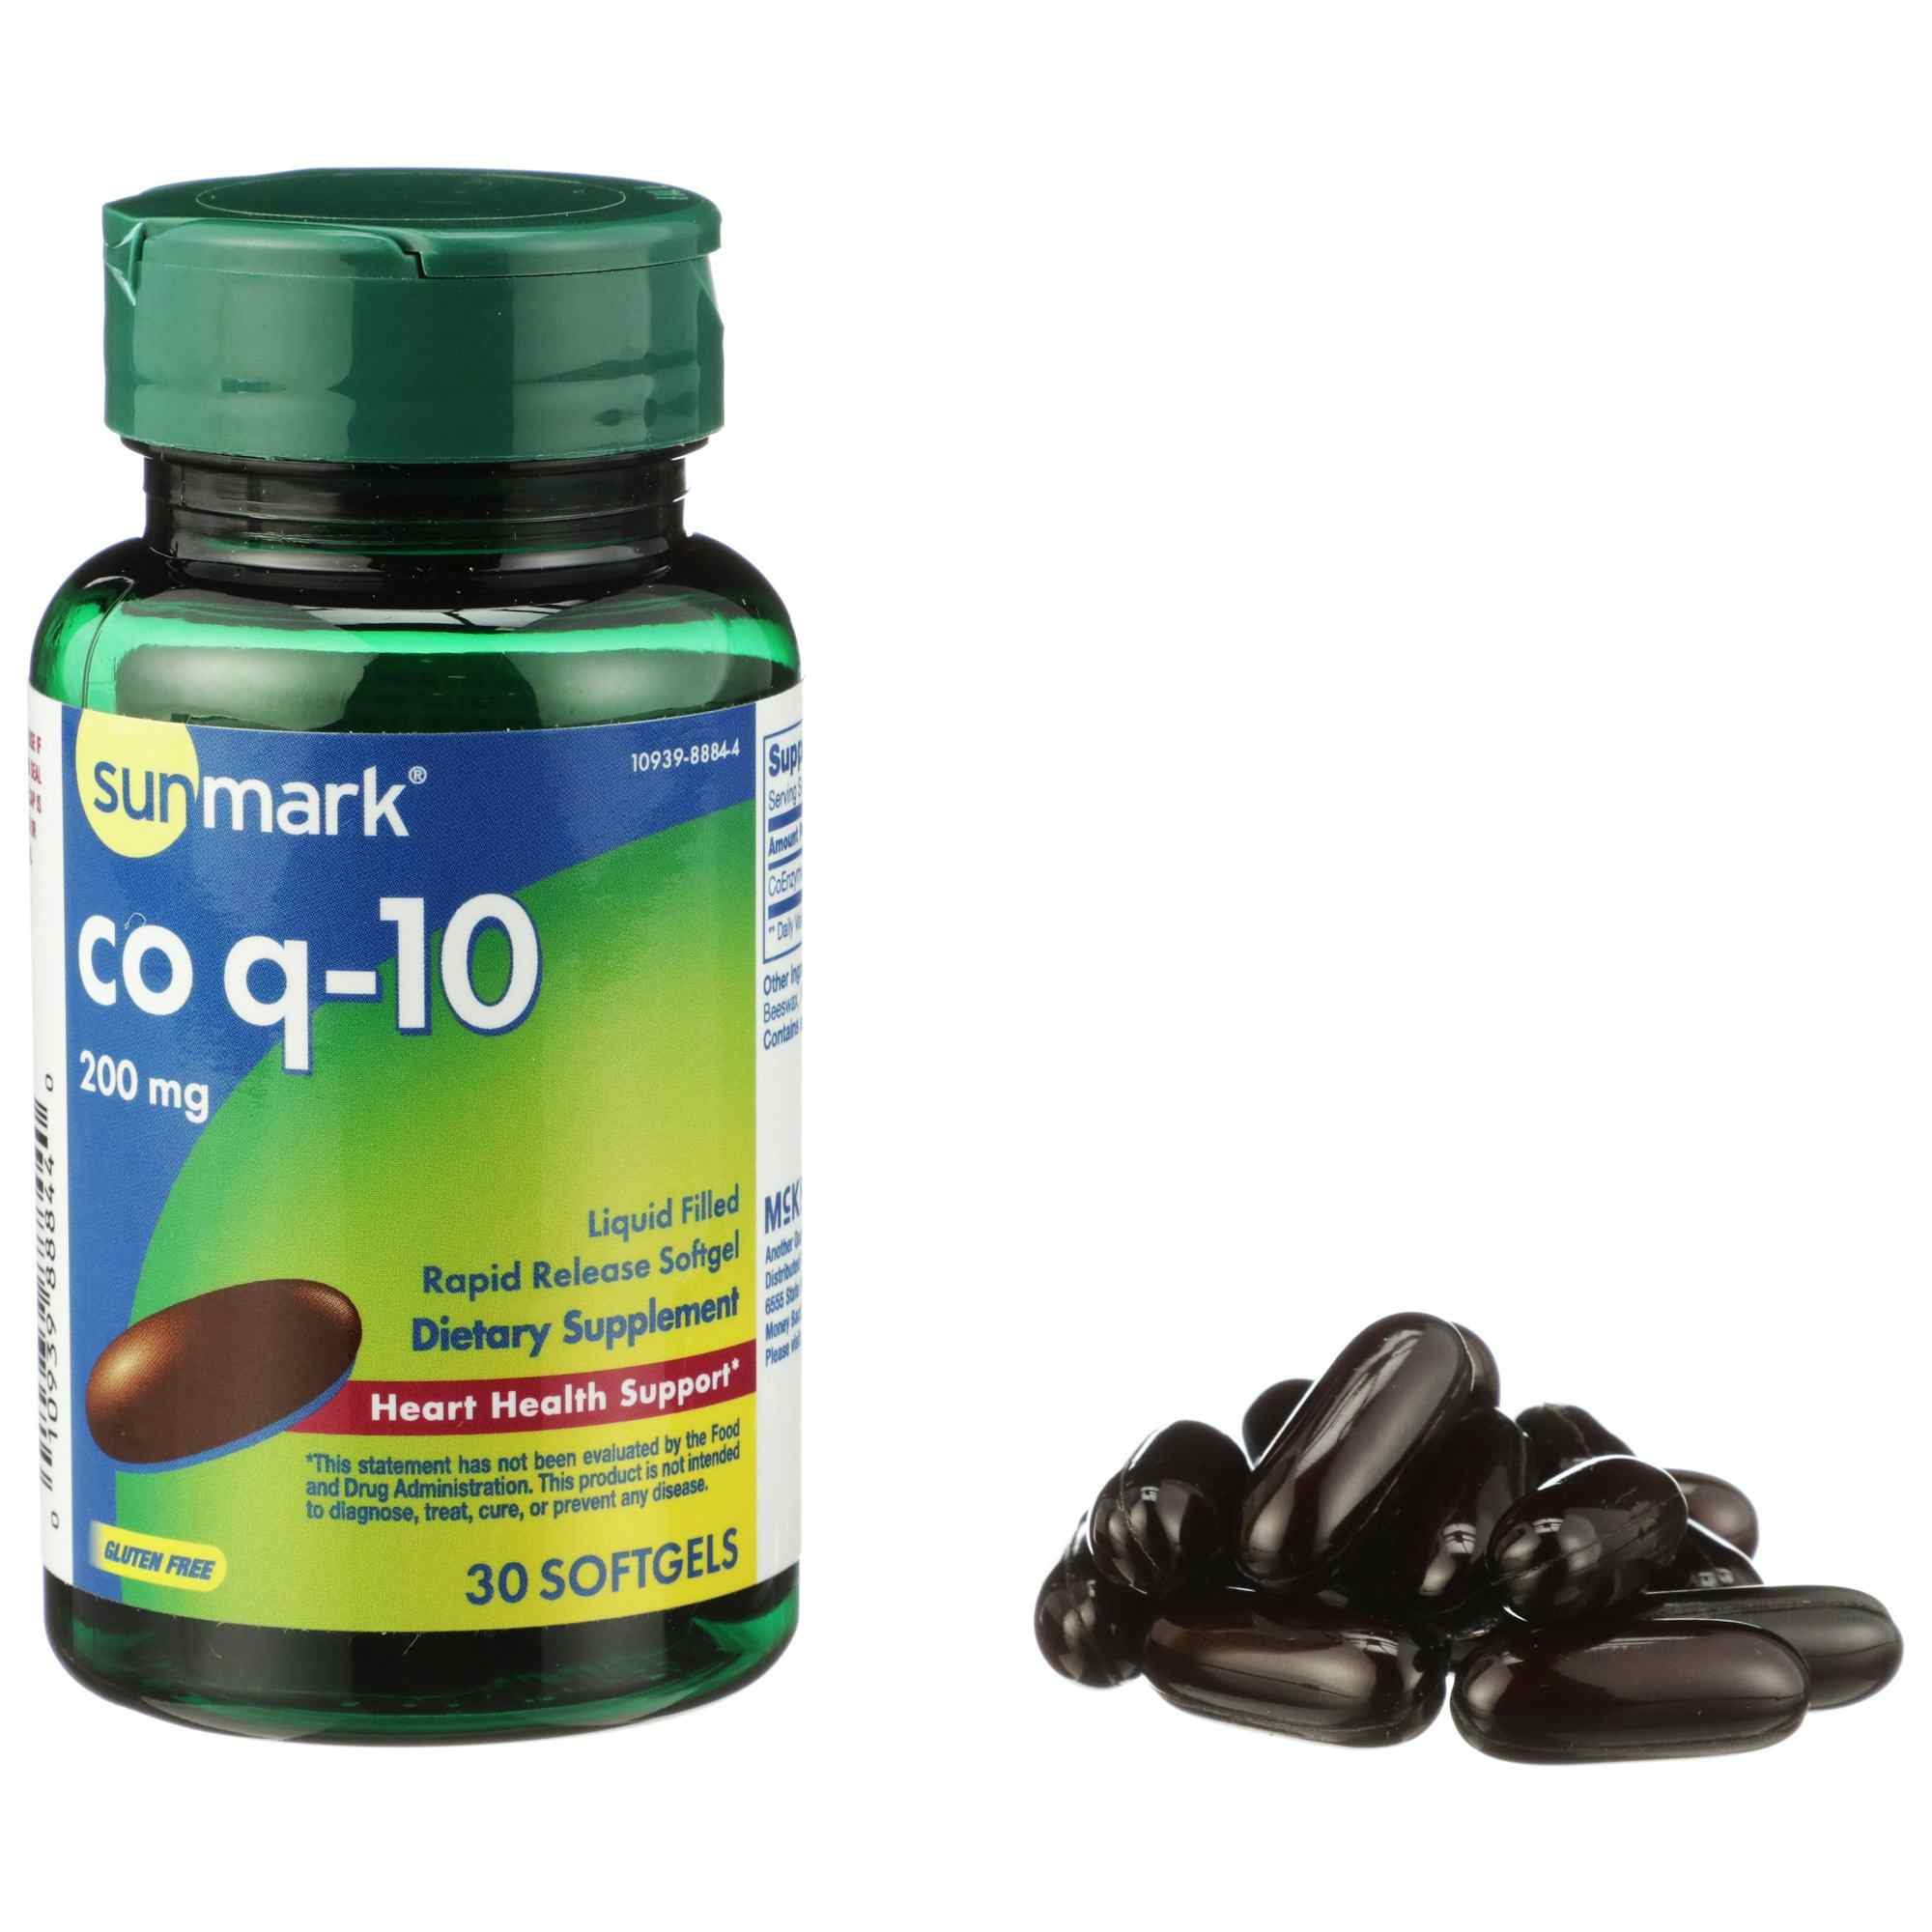 Suunmark Co Q-10 Dietary Supplement, 200 mg, 30 Softgels, 01093988844, 1 Bottle